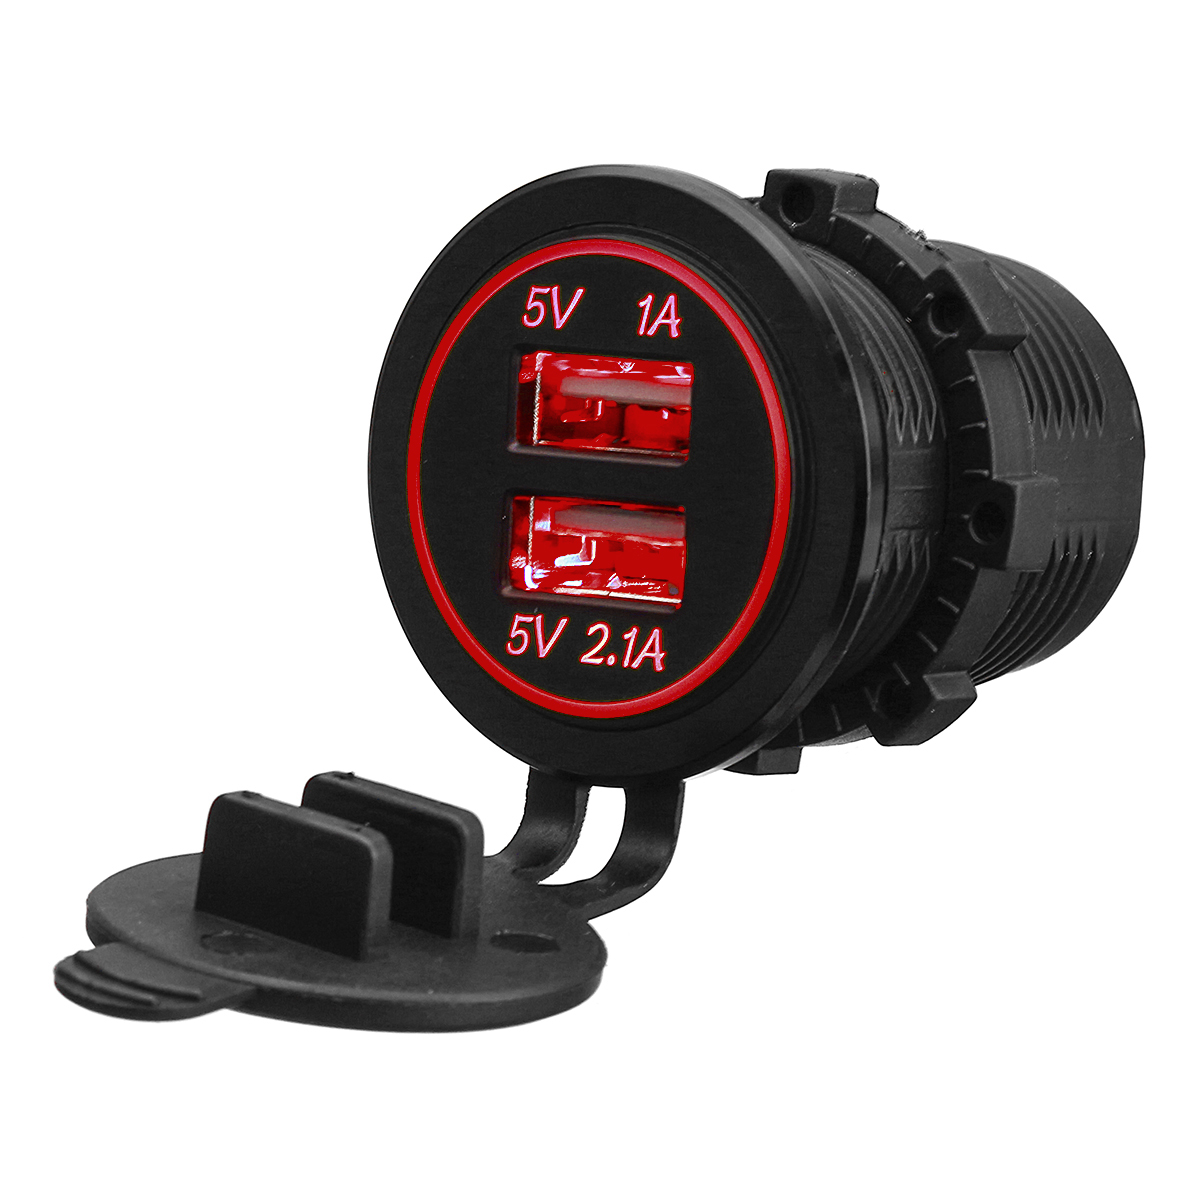 12-24V-31A--Dual-USB-Socket-Car-Charger-Power-Adapter-For-Car-Motorcycle-ATV-Boat-1384435